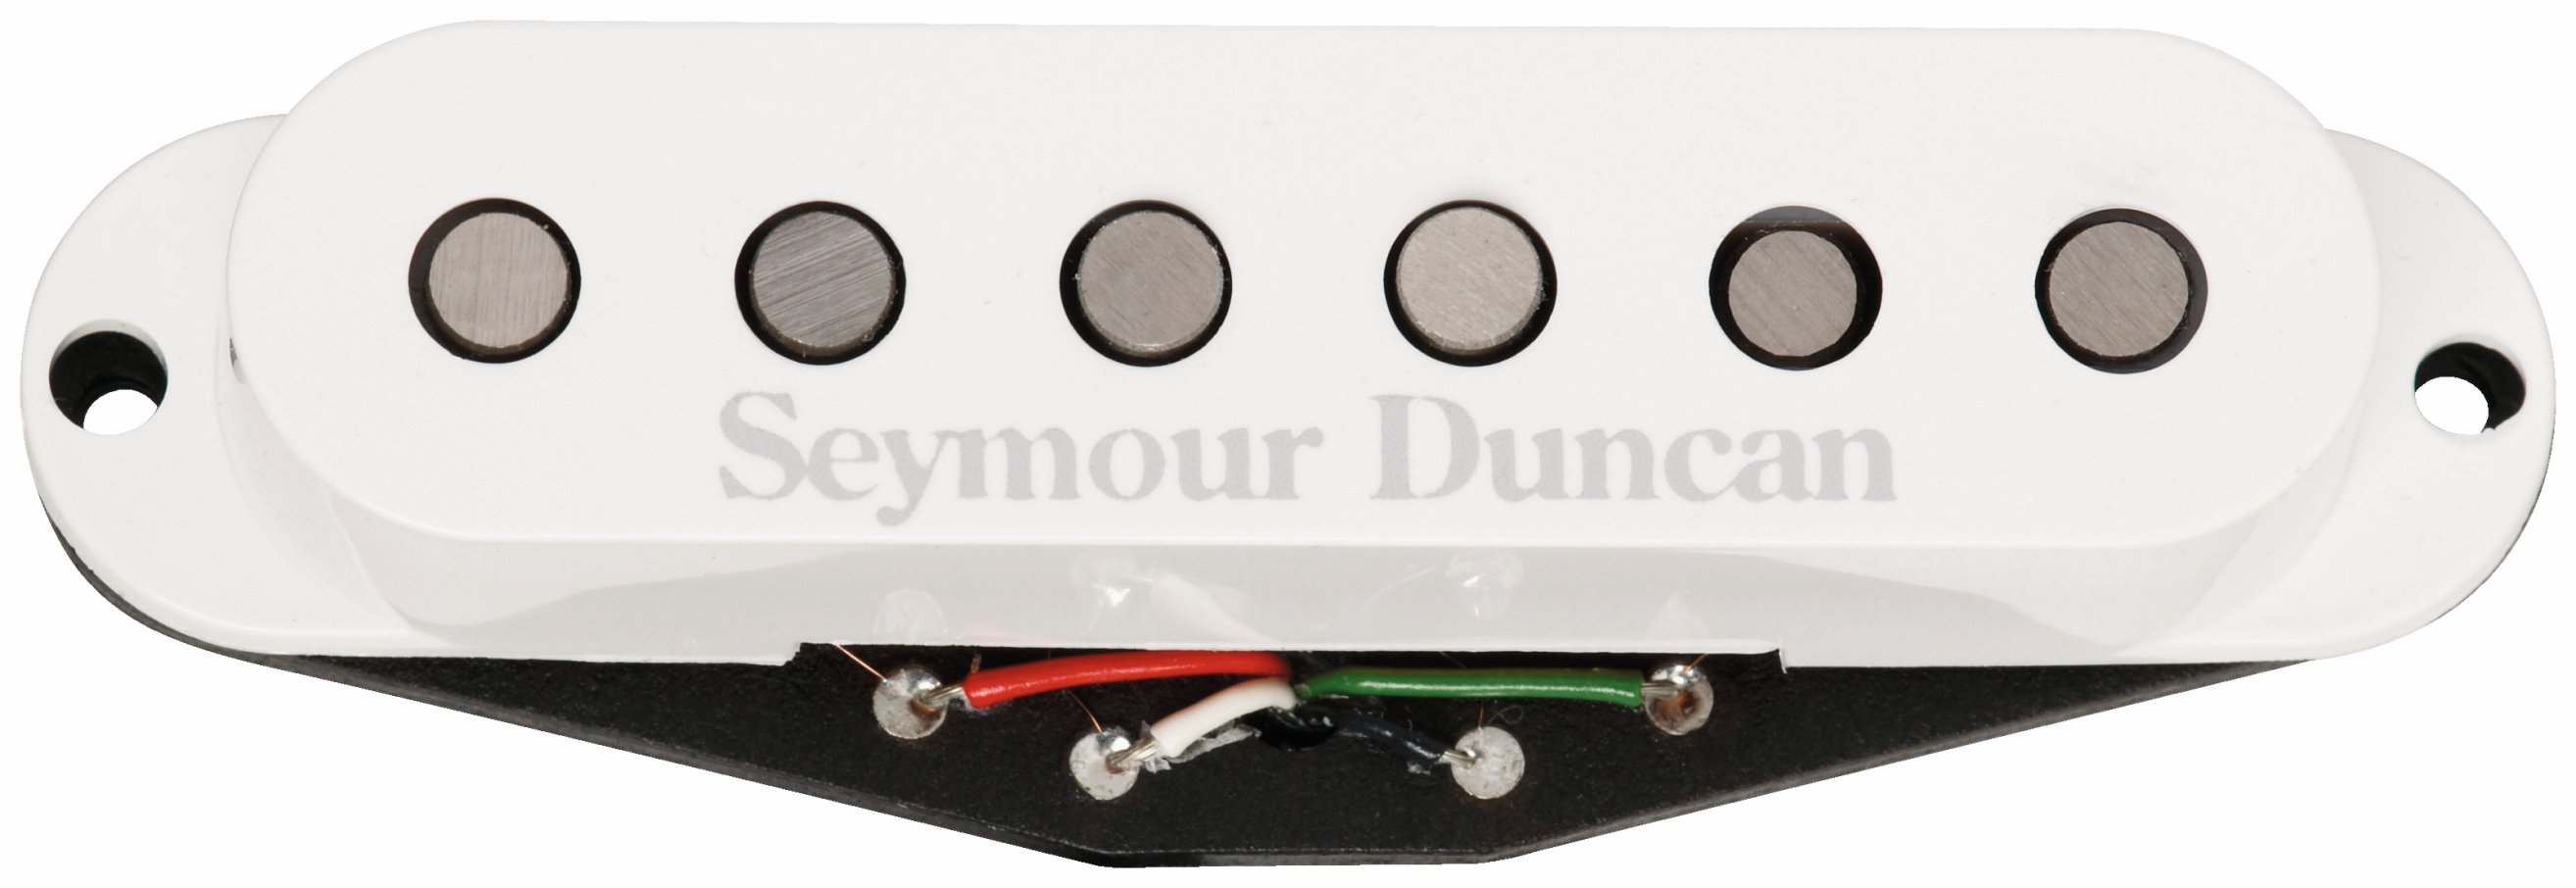 Seymour Duncan STK-S1B - Classic Strat Stack - Bridge Pickup - White